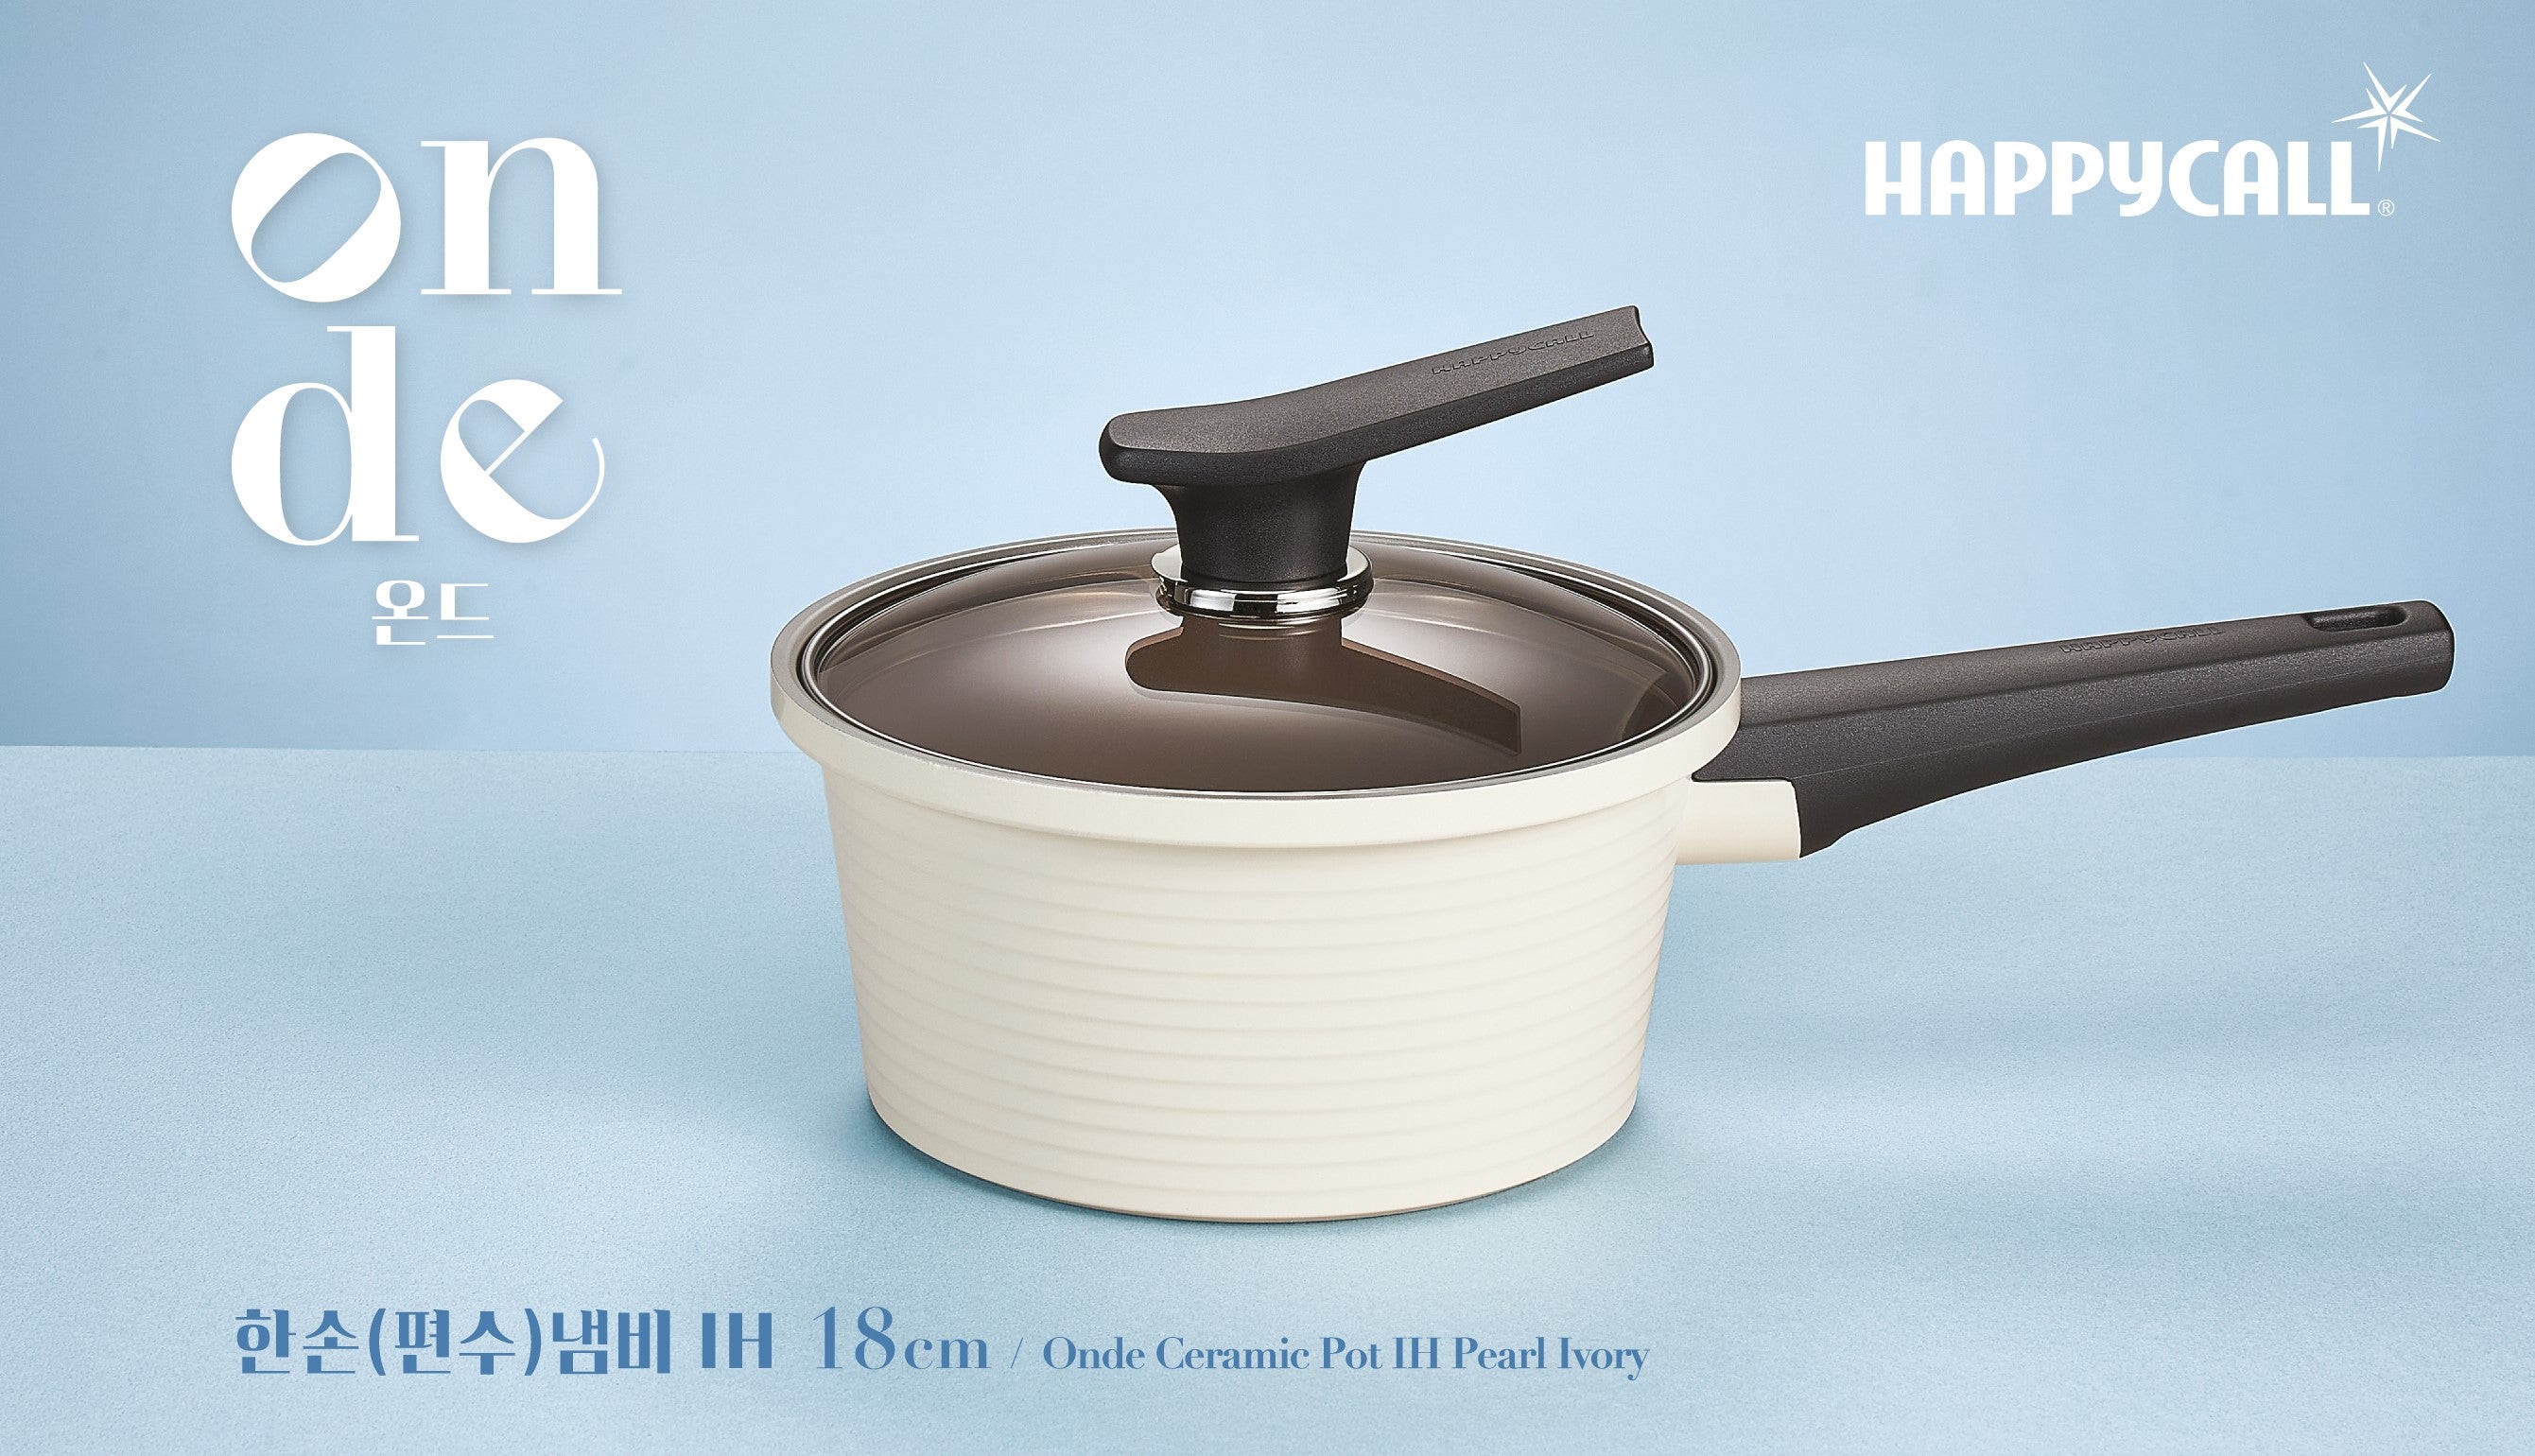 Happycall IH Onde Ceramic Pot - 18cm Single Handle (1.8L)